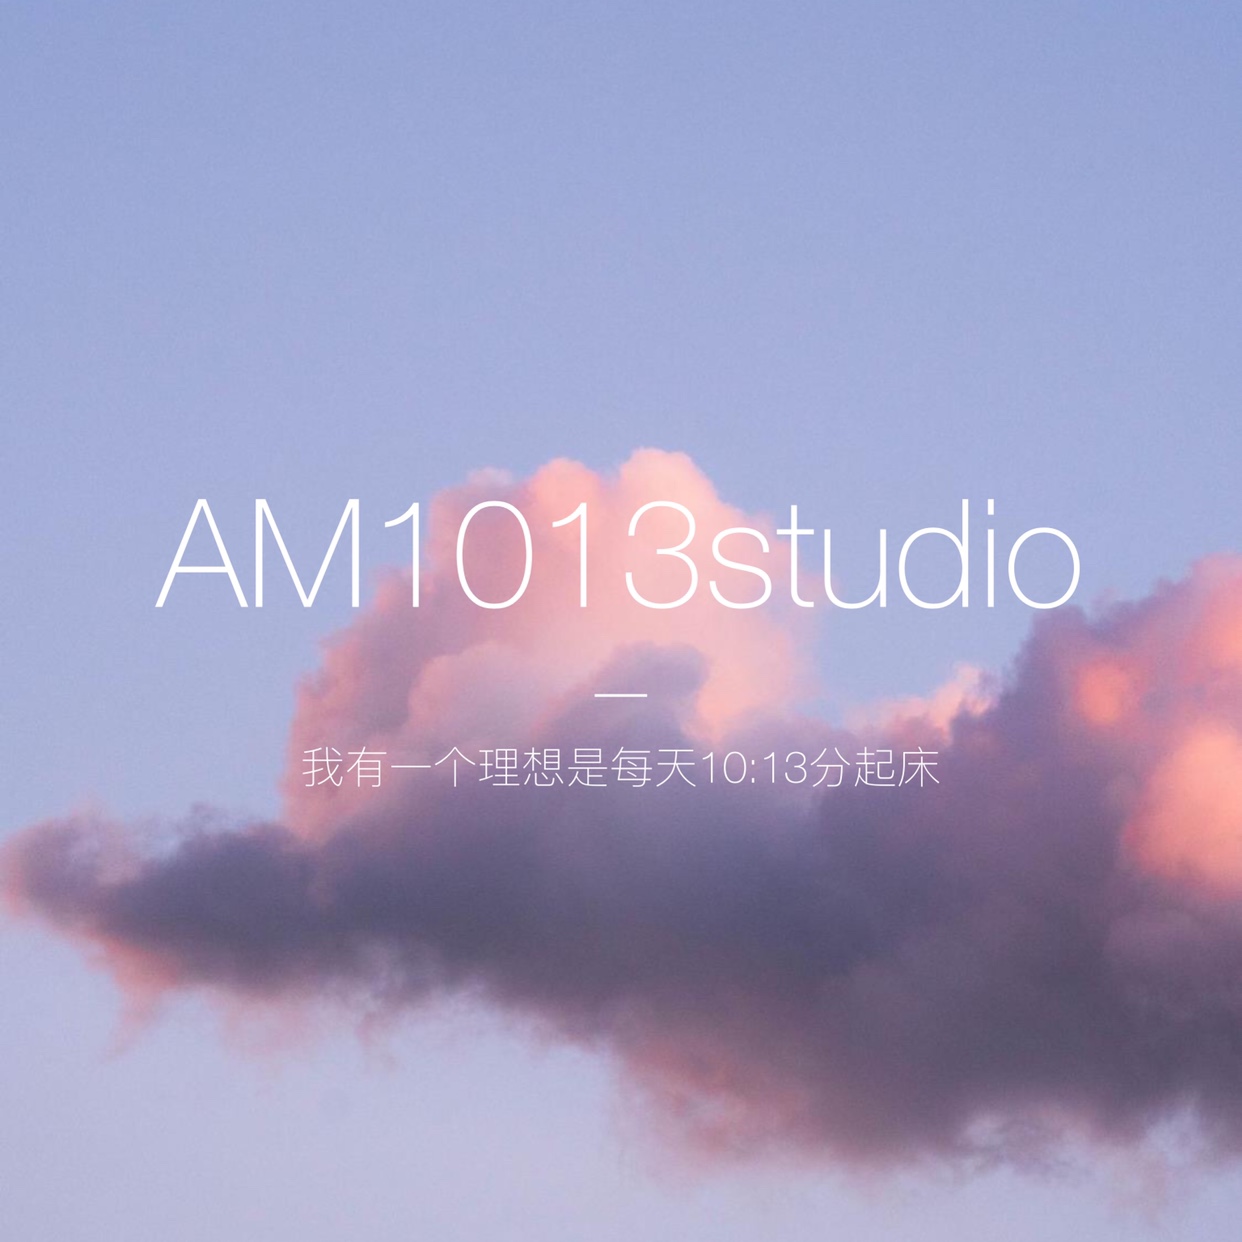 AM1013 Studio